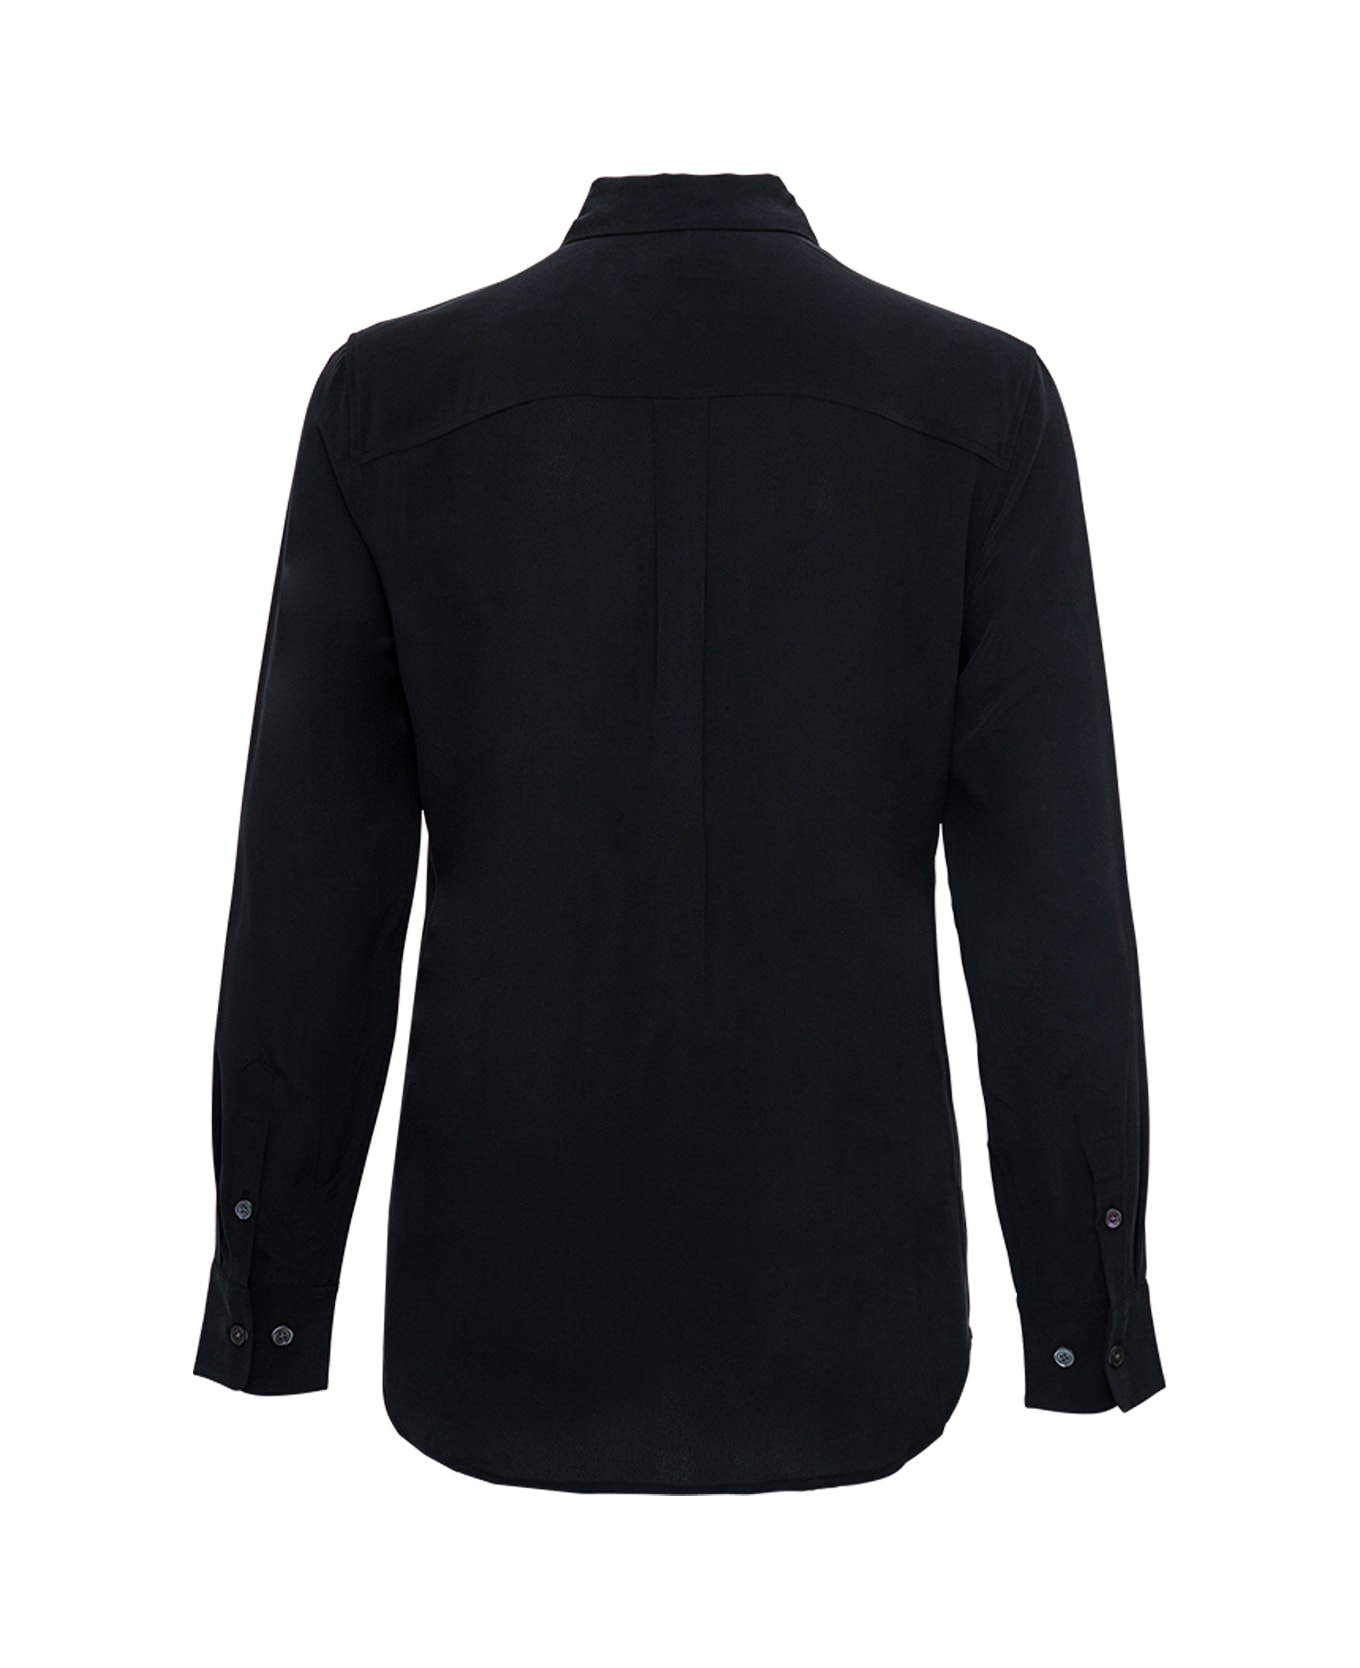 Equipment Black Silk Shirt With Pockets - Nero